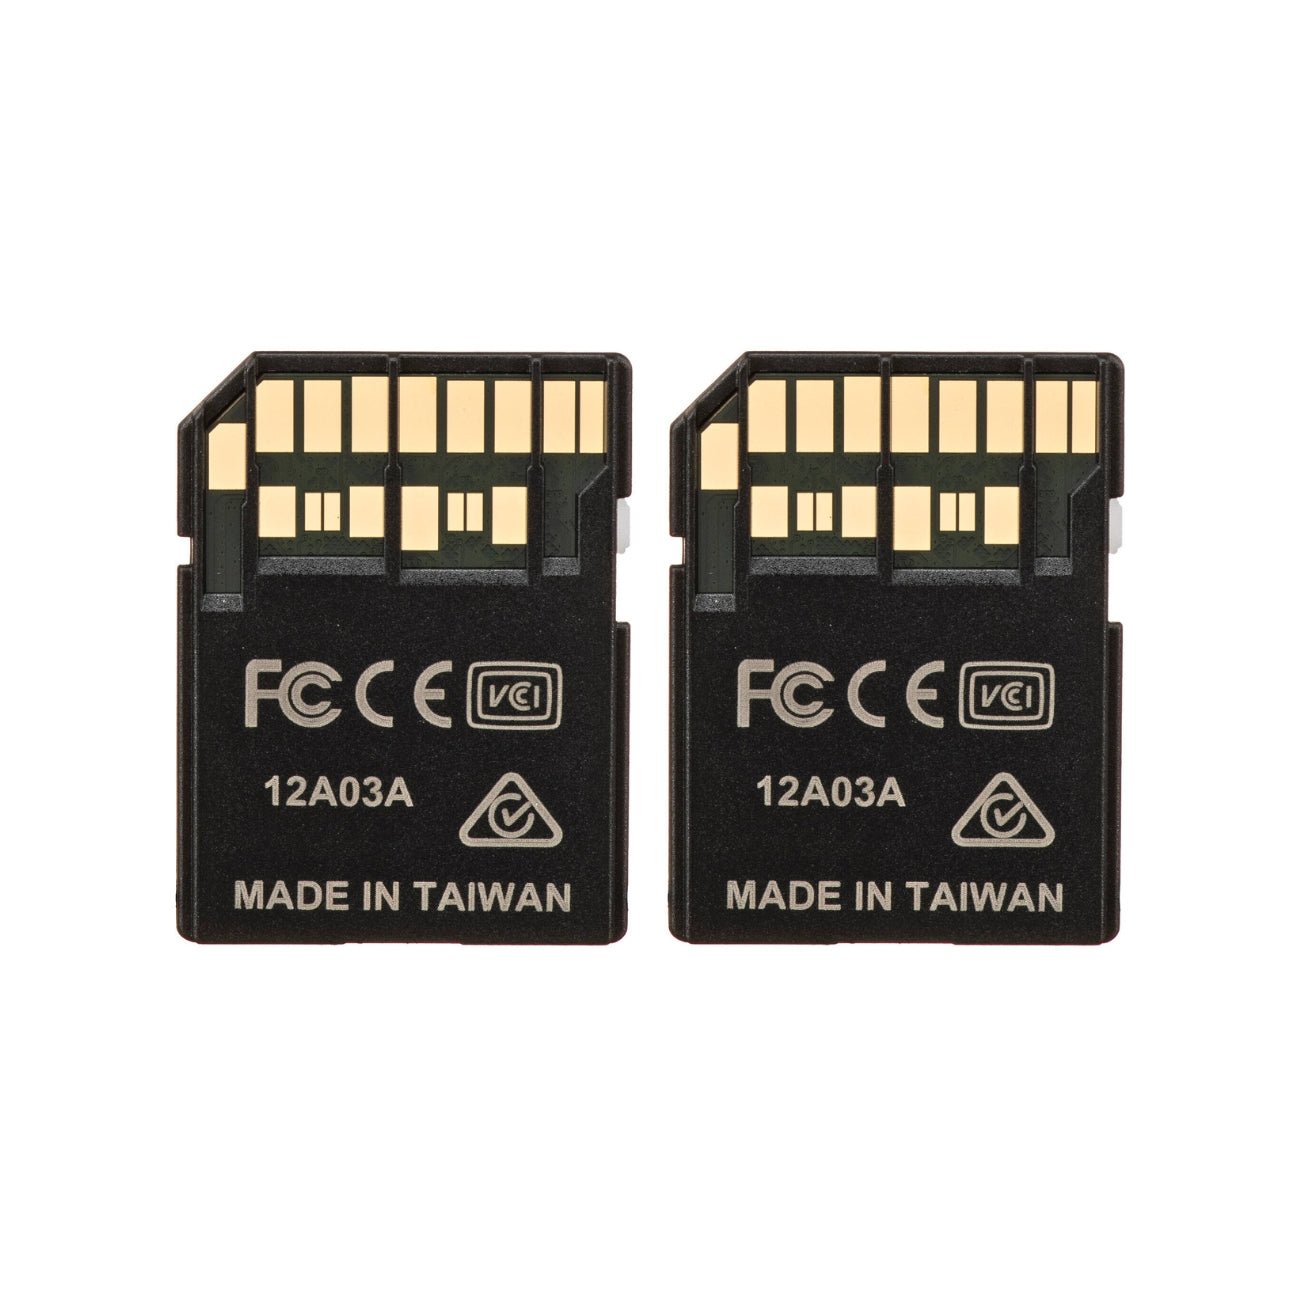  ProGrade Digital SDXC UHS-II V90 300R Memory Card (128GB) :  Electronics